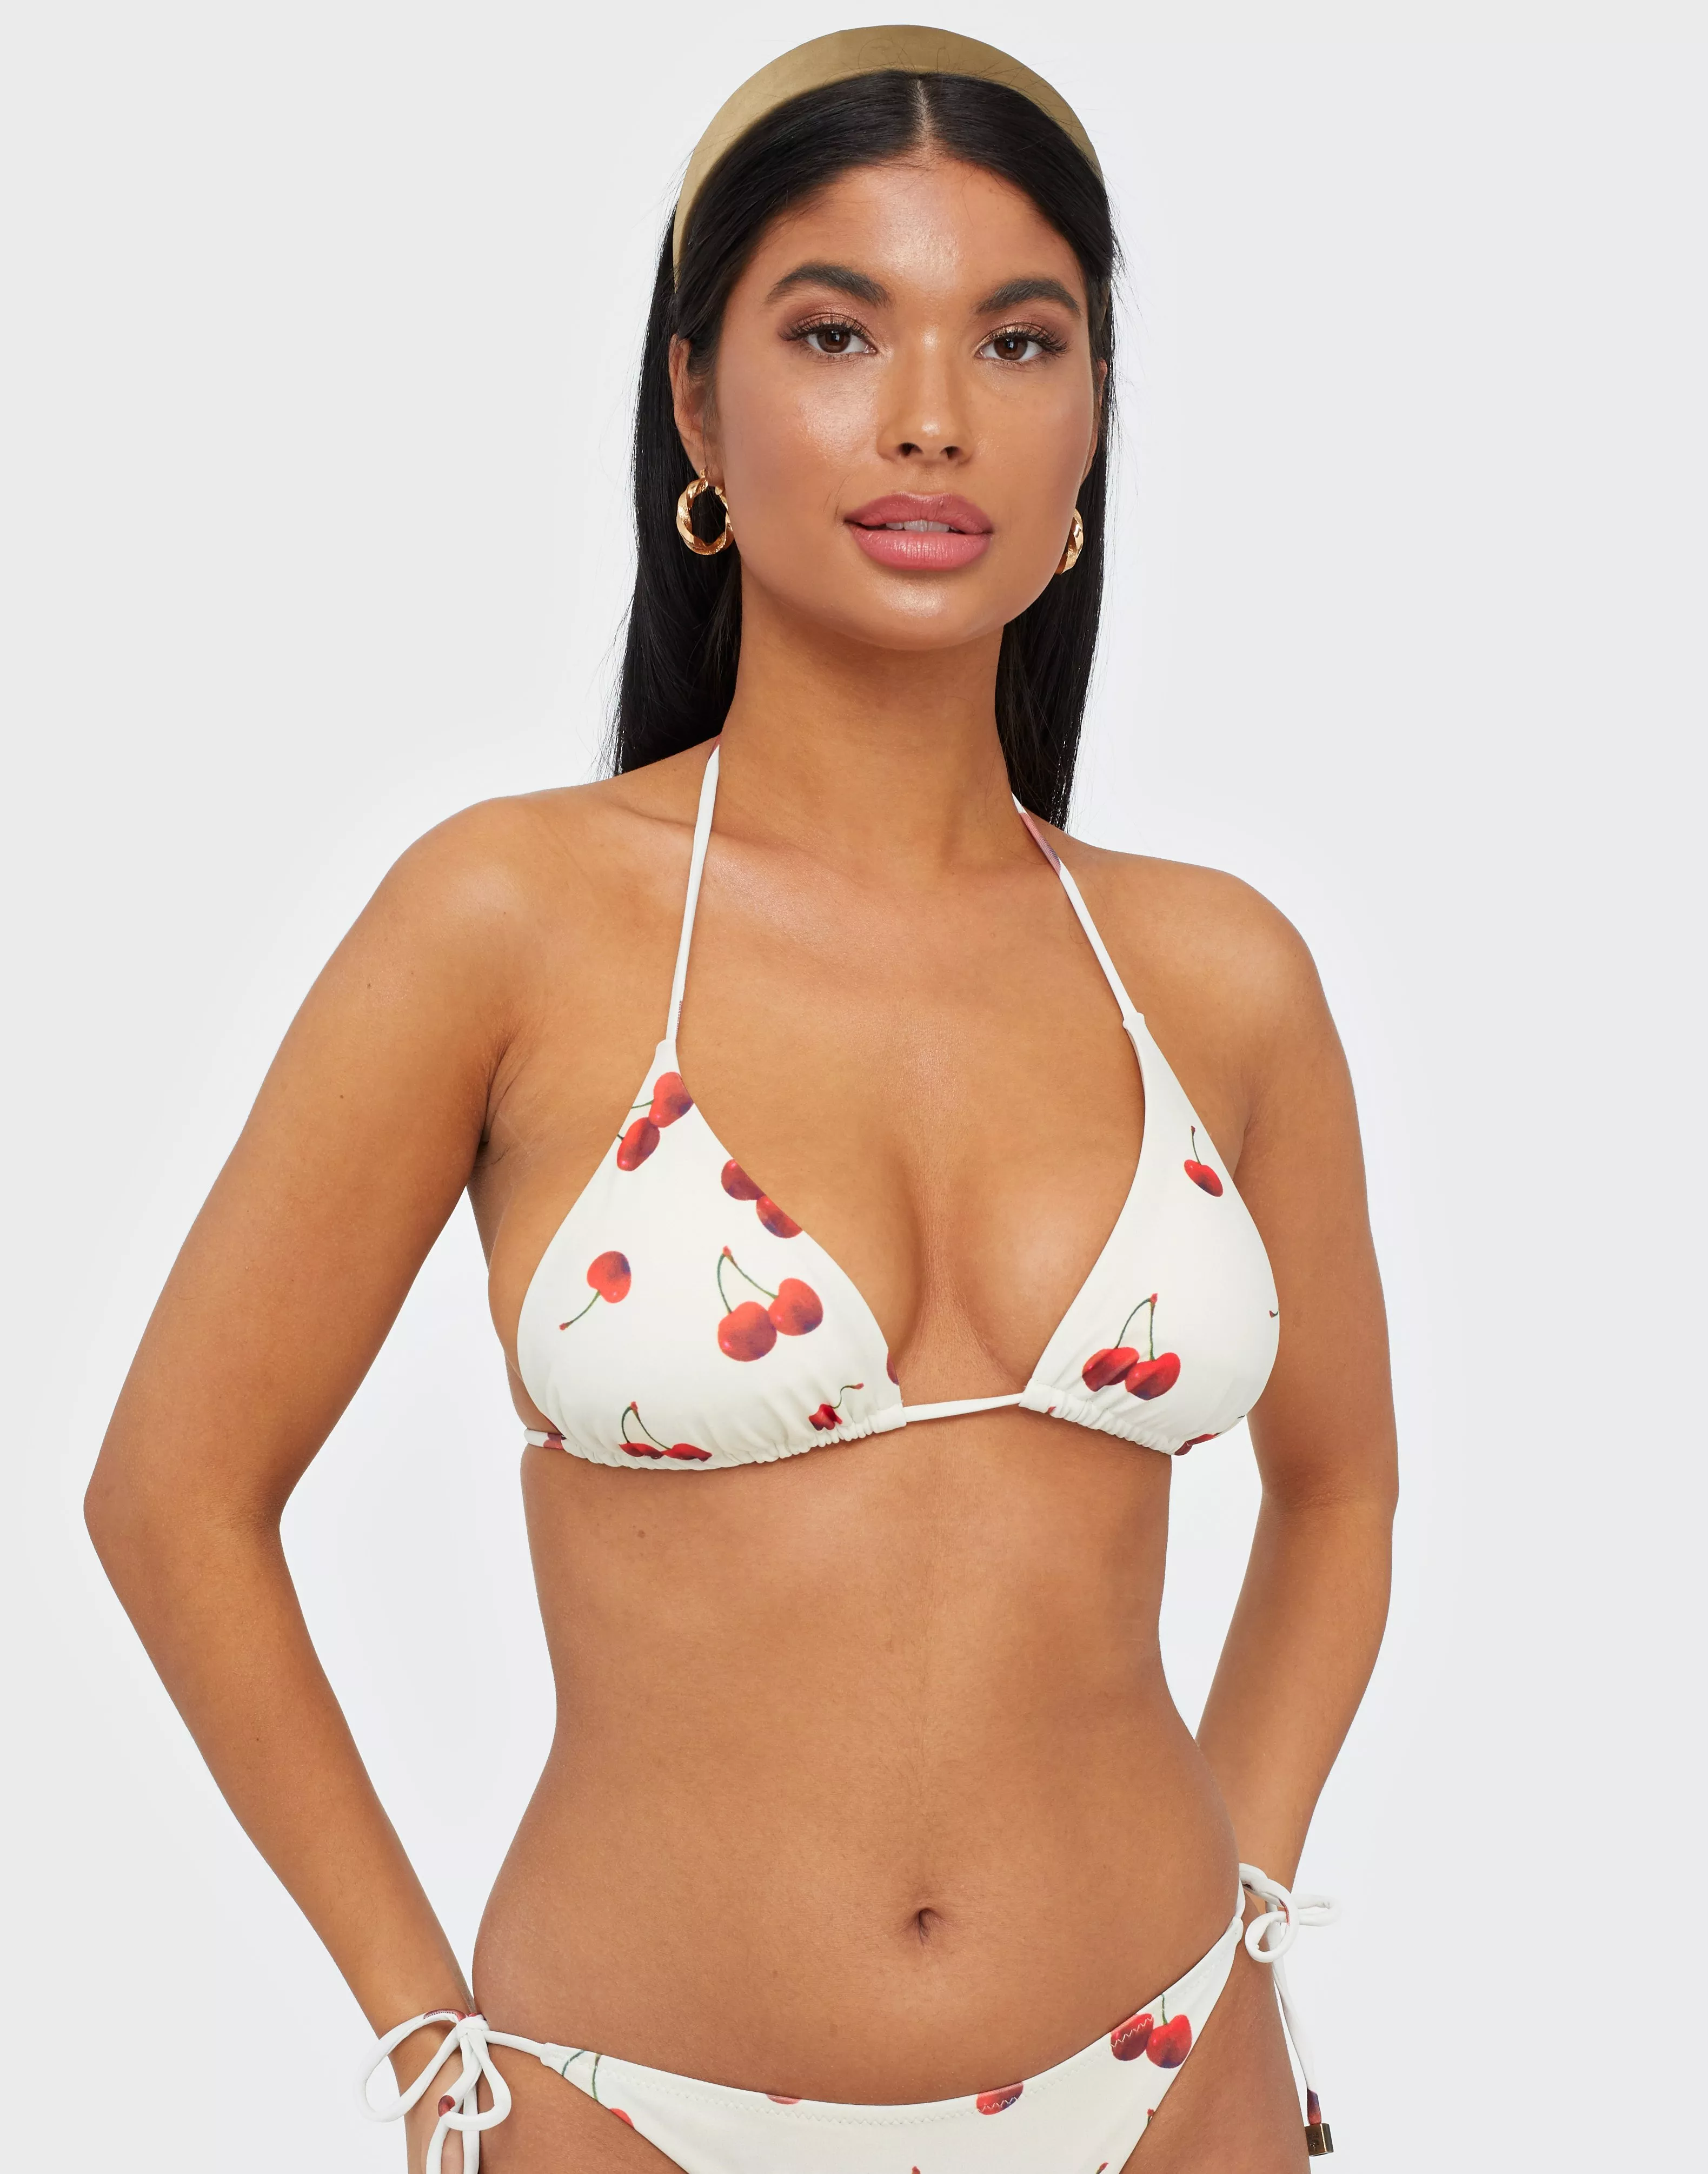 Buy OAS Triangle Top Cherry Bikini - Red